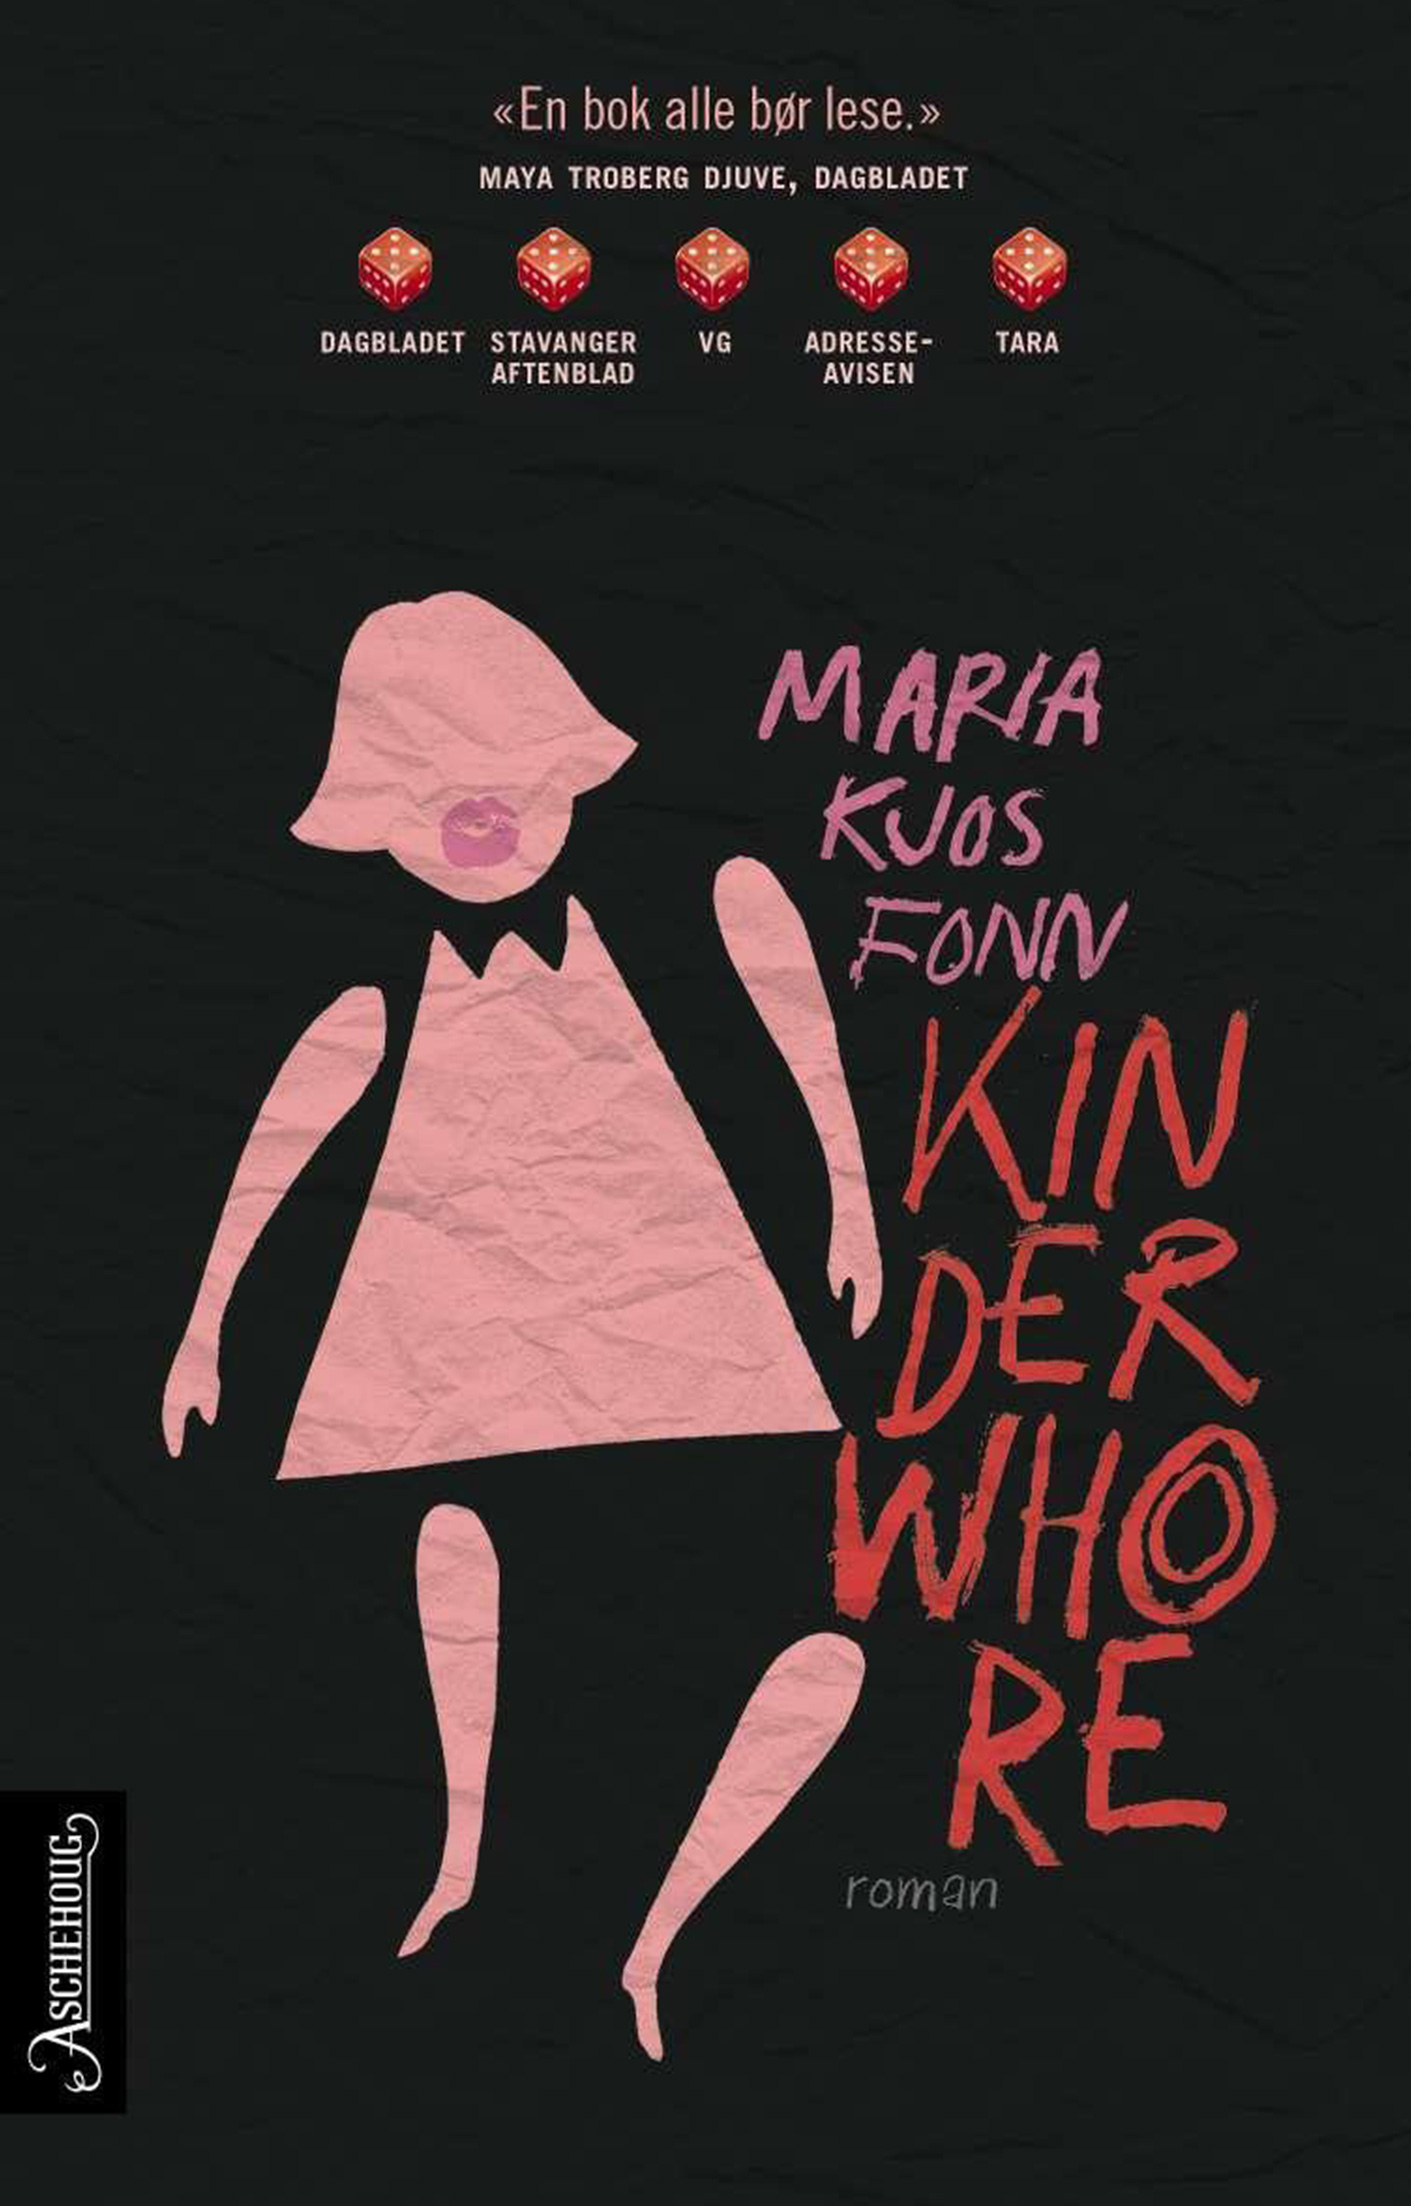 Kinderwhore (2018) Maria Kjos Fonn